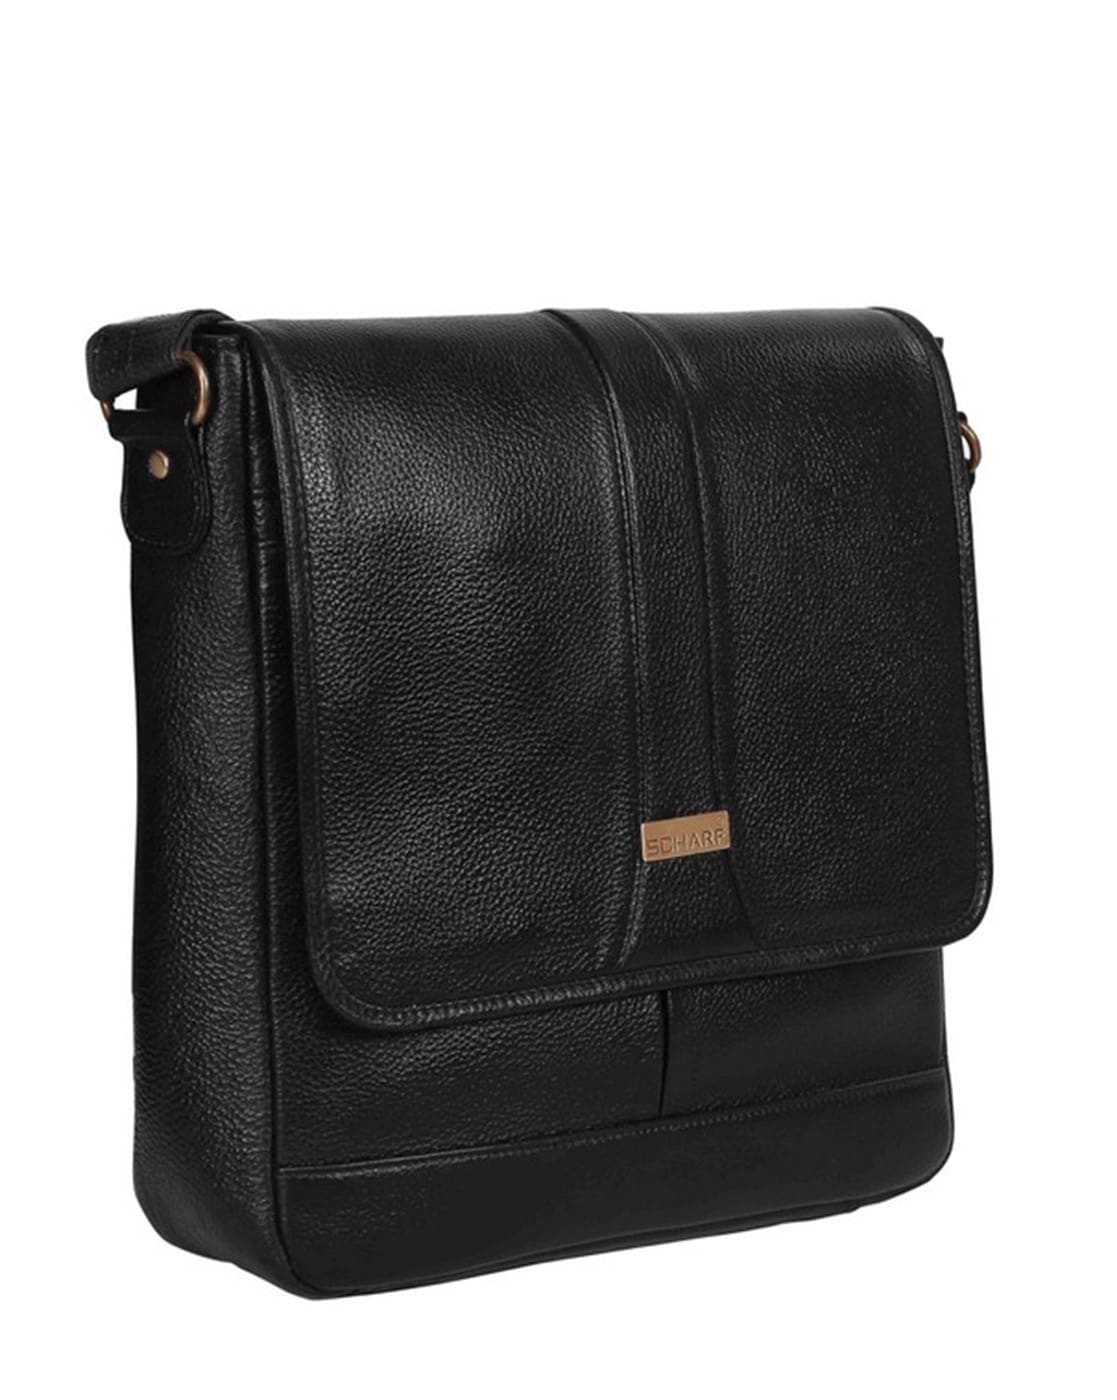 Buy SCHARF Grey Leather Laptop Bag at Best Price @ Tata CLiQ